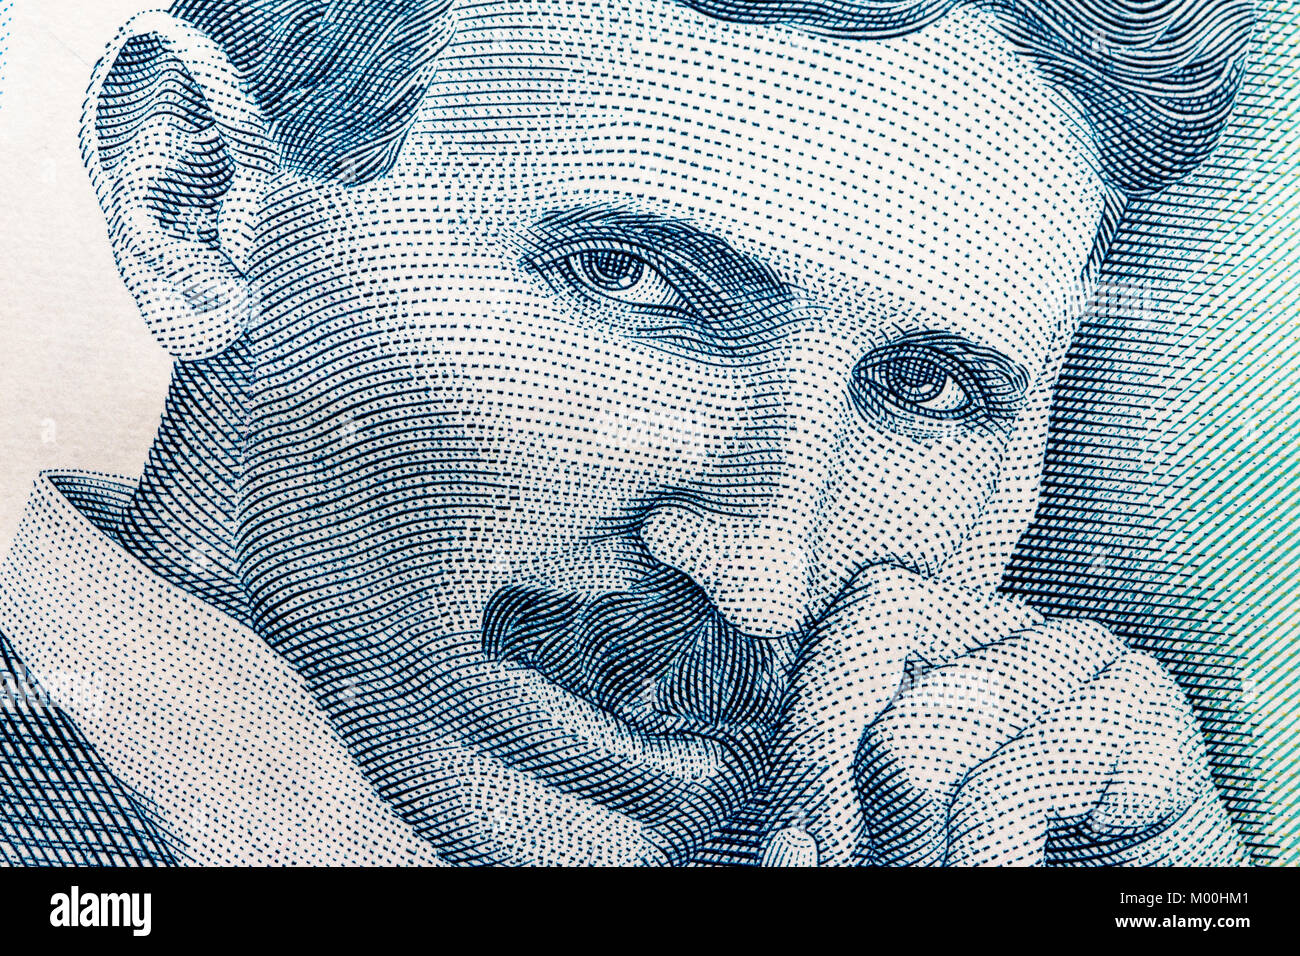 Portrait of scientist Nikola Tesla Stock Photo